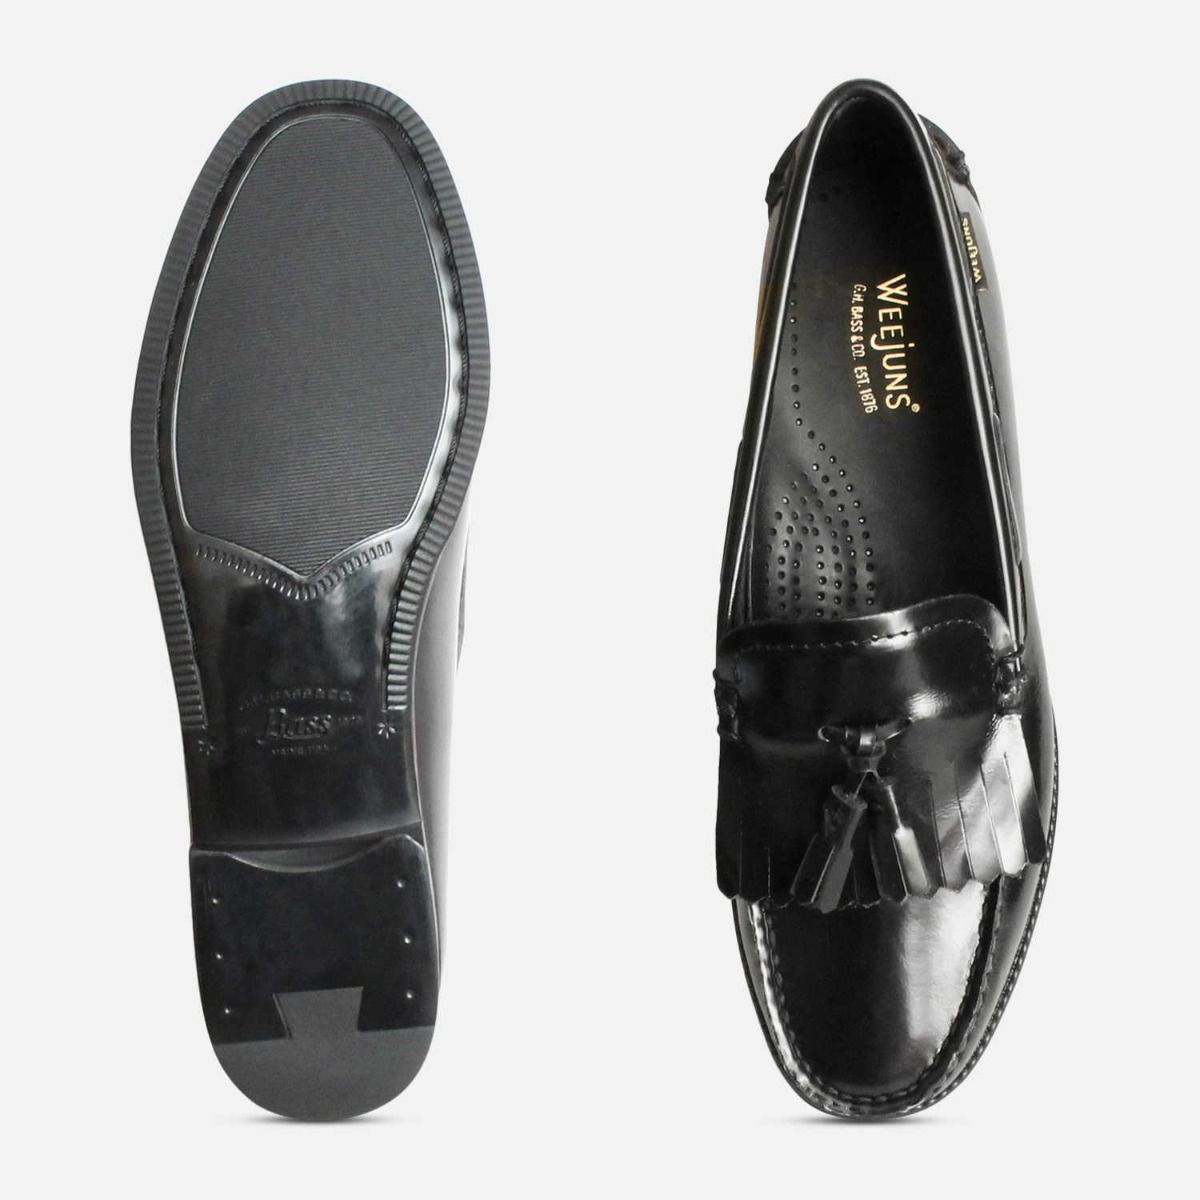 Bass Rubber Sole Ladies Esther Kiltie Black Loafer Shoes